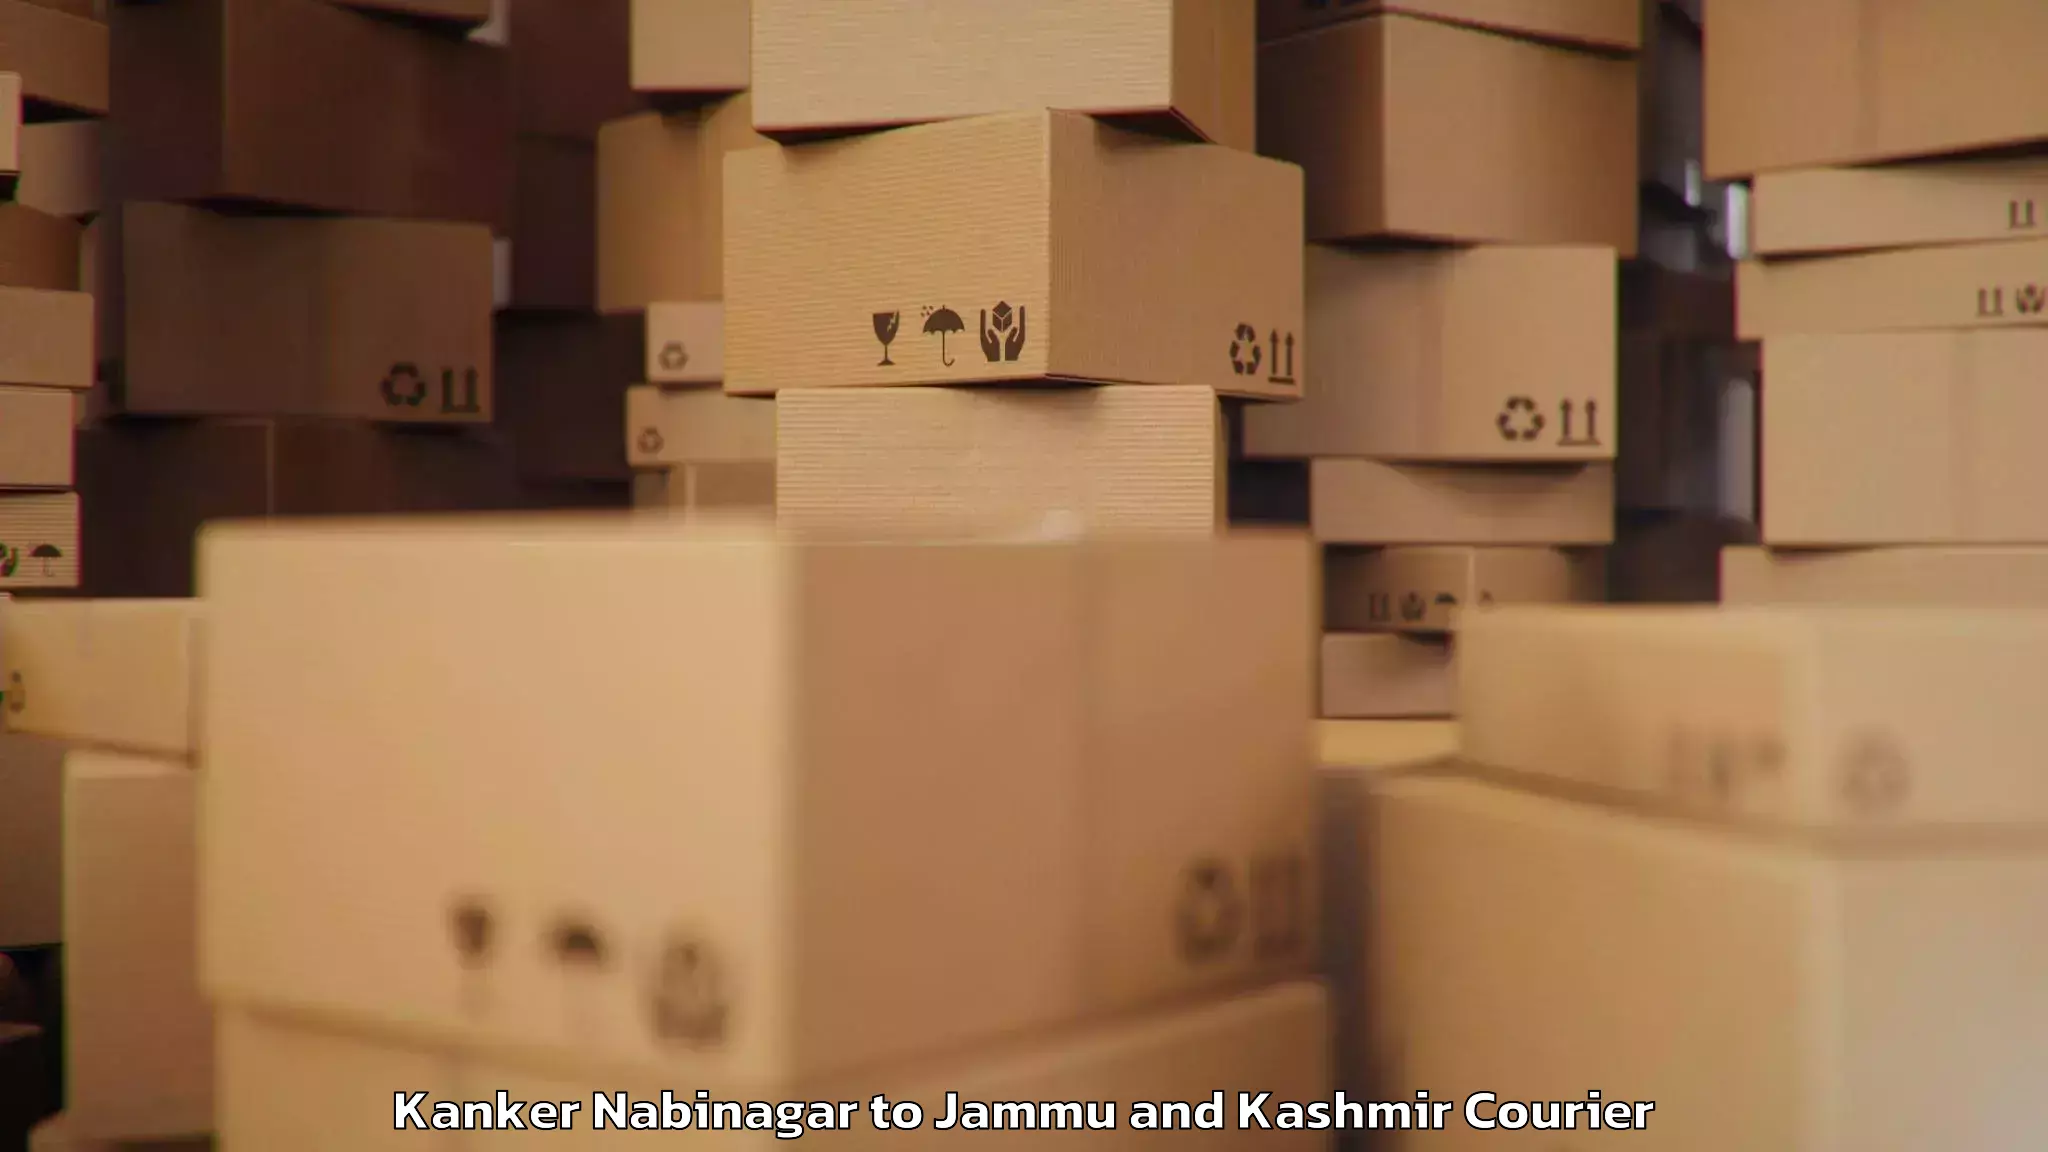 Baggage transport professionals Kanker Nabinagar to Srinagar Kashmir